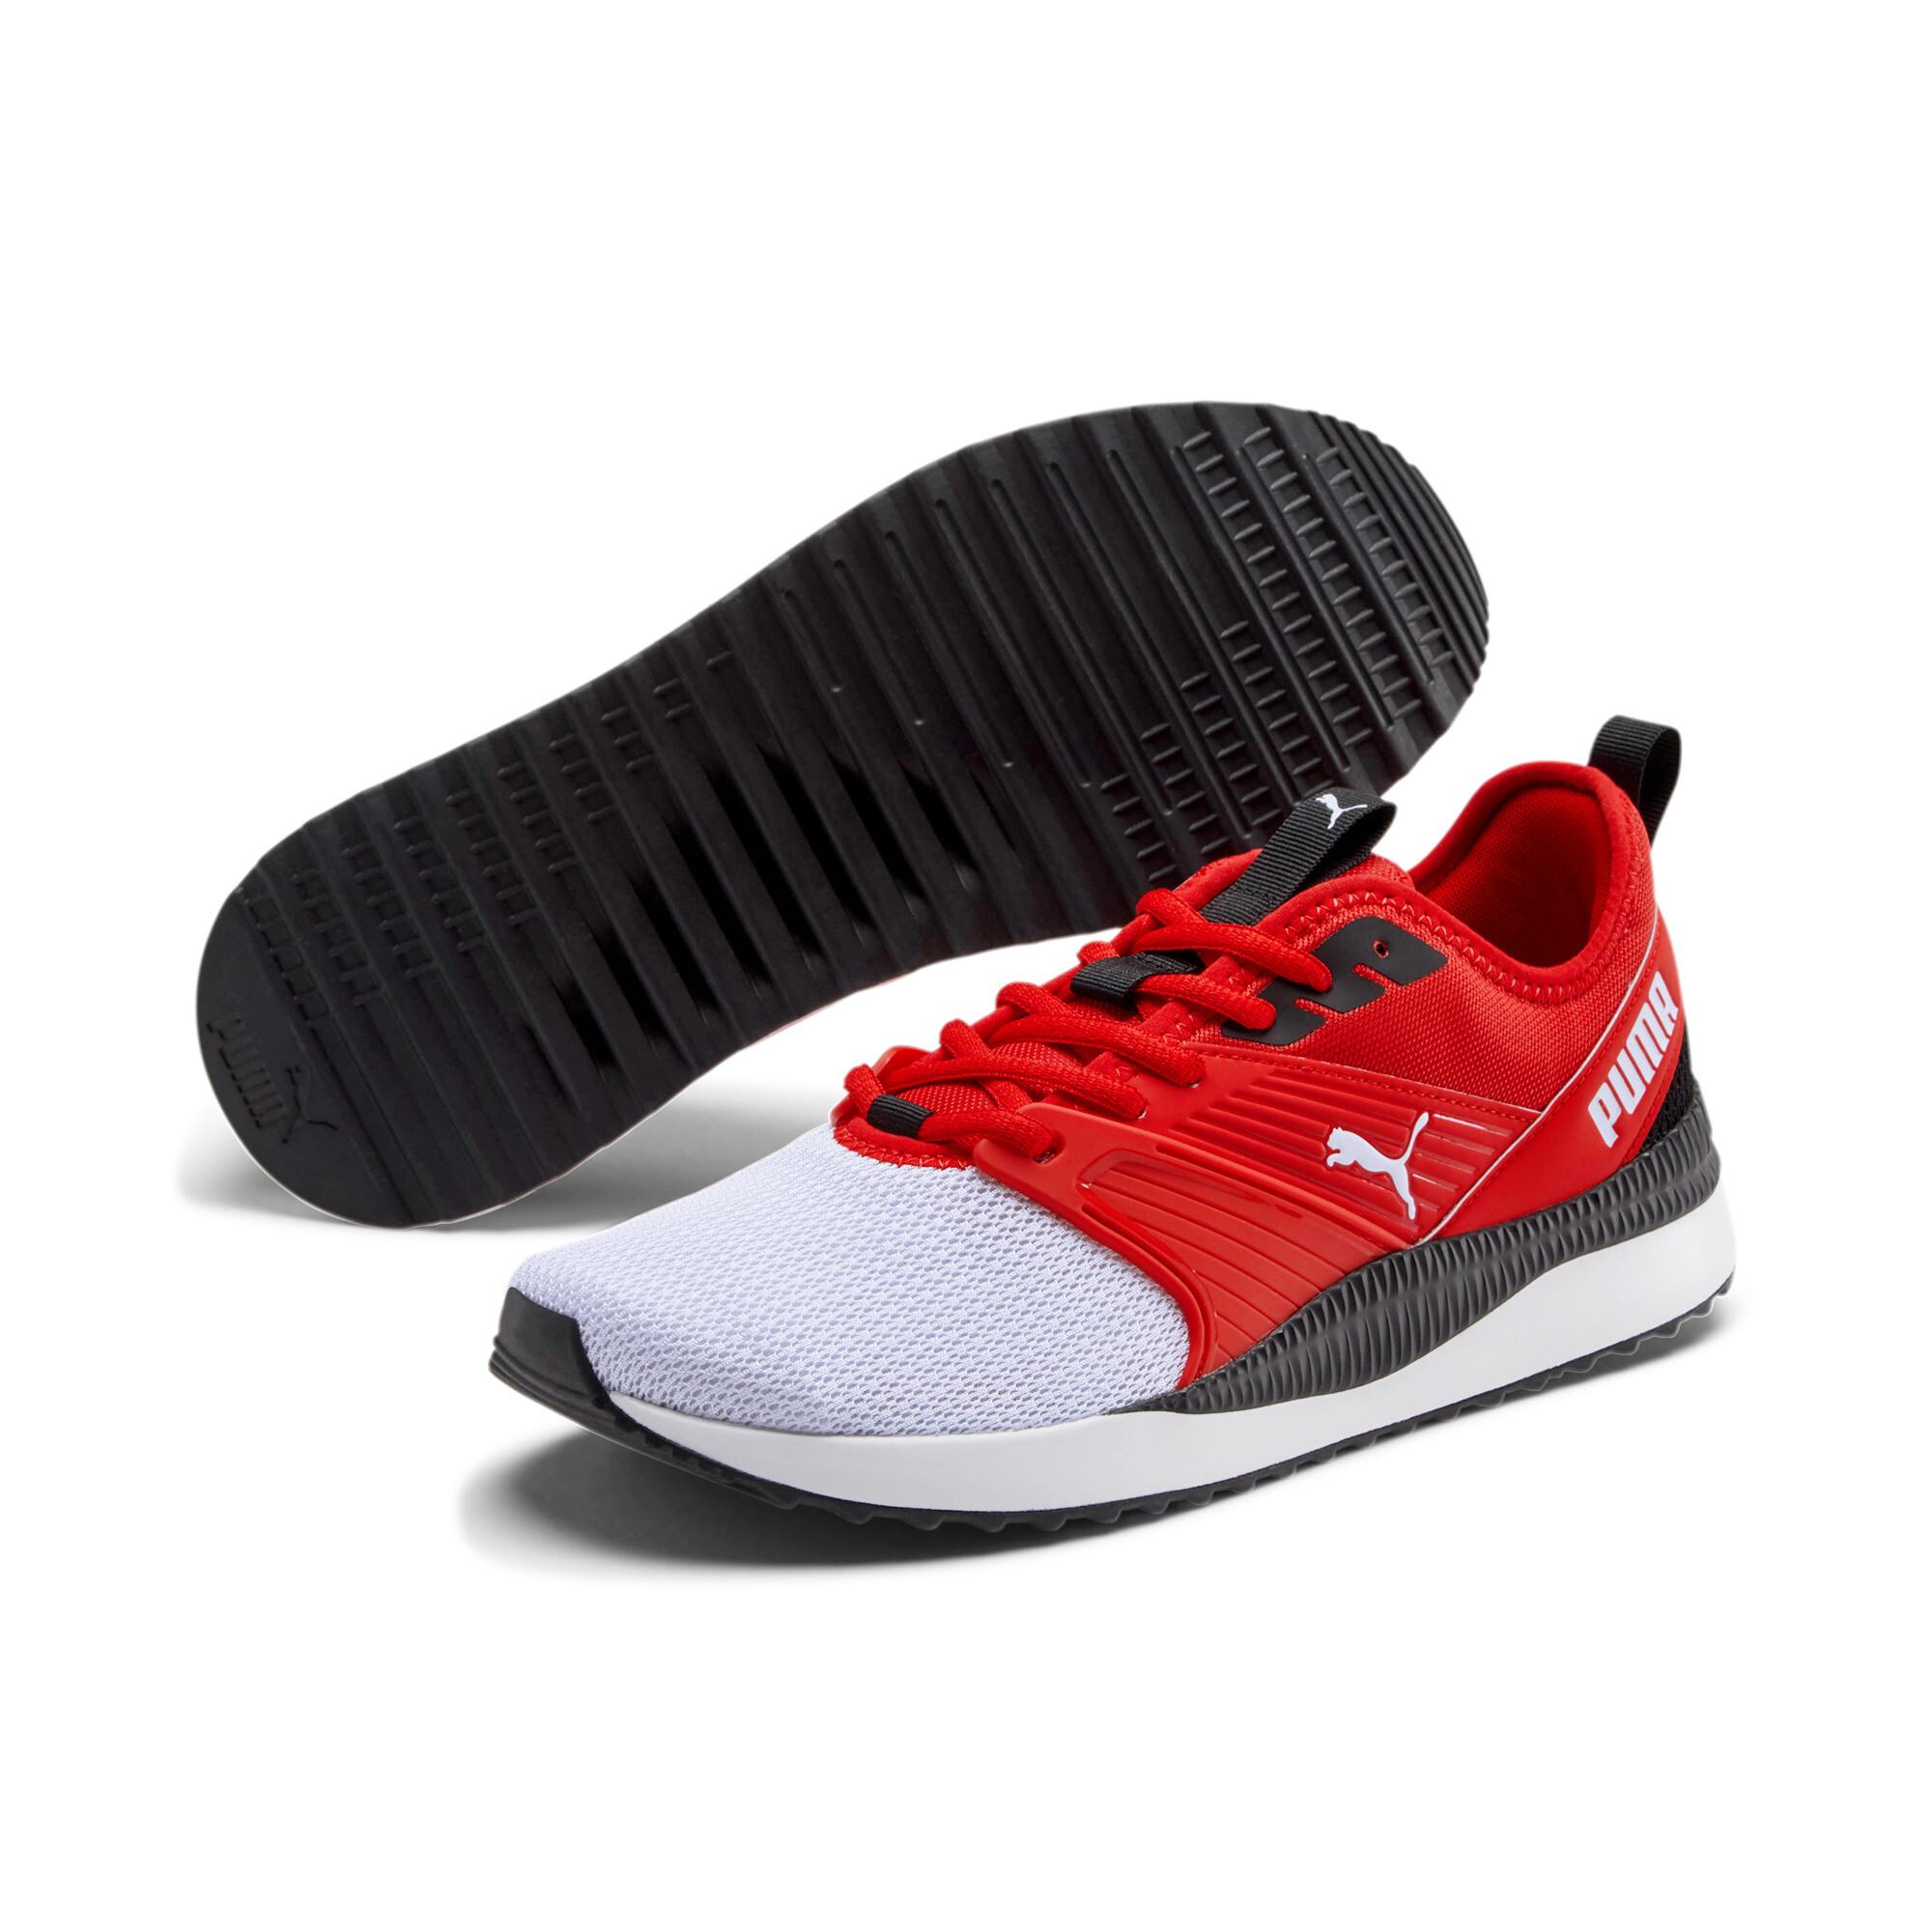 PUMA Pacer Next FFWD Men's Sneakers Men Shoe Basics | eBay